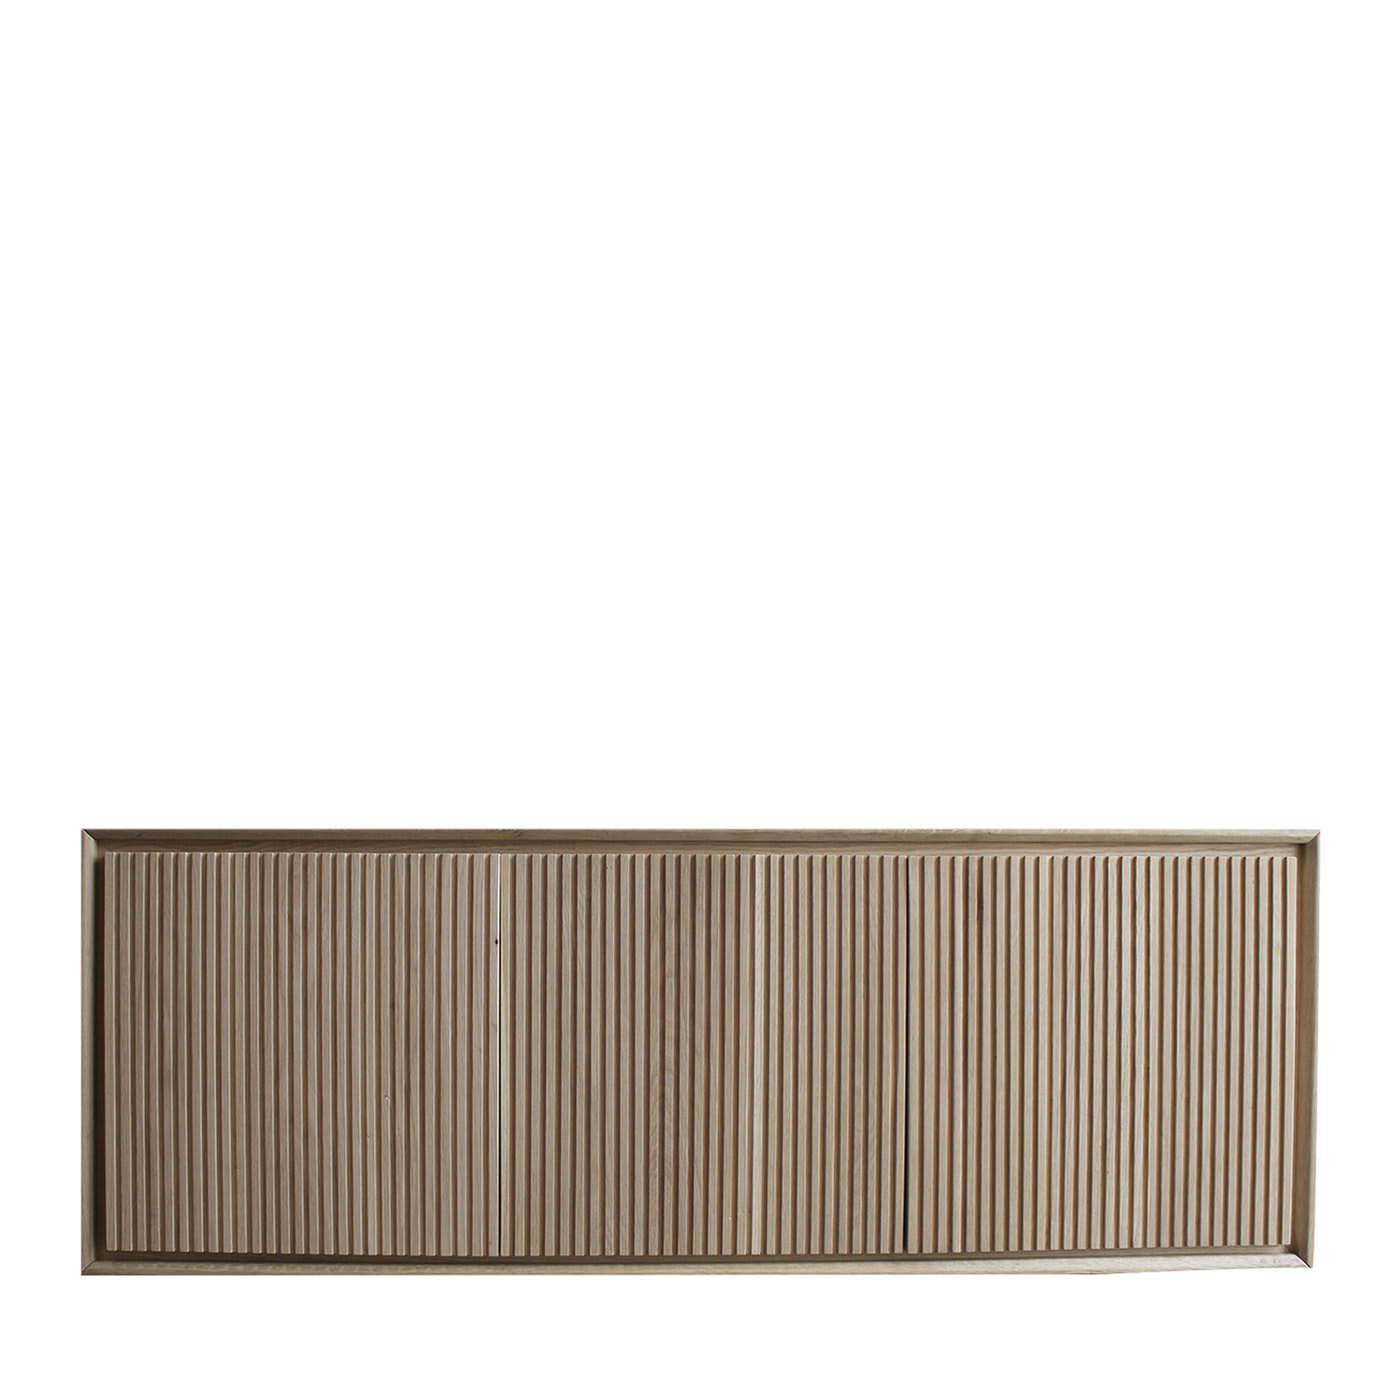 Fuga Sospesa Sideboard - Meccani Design